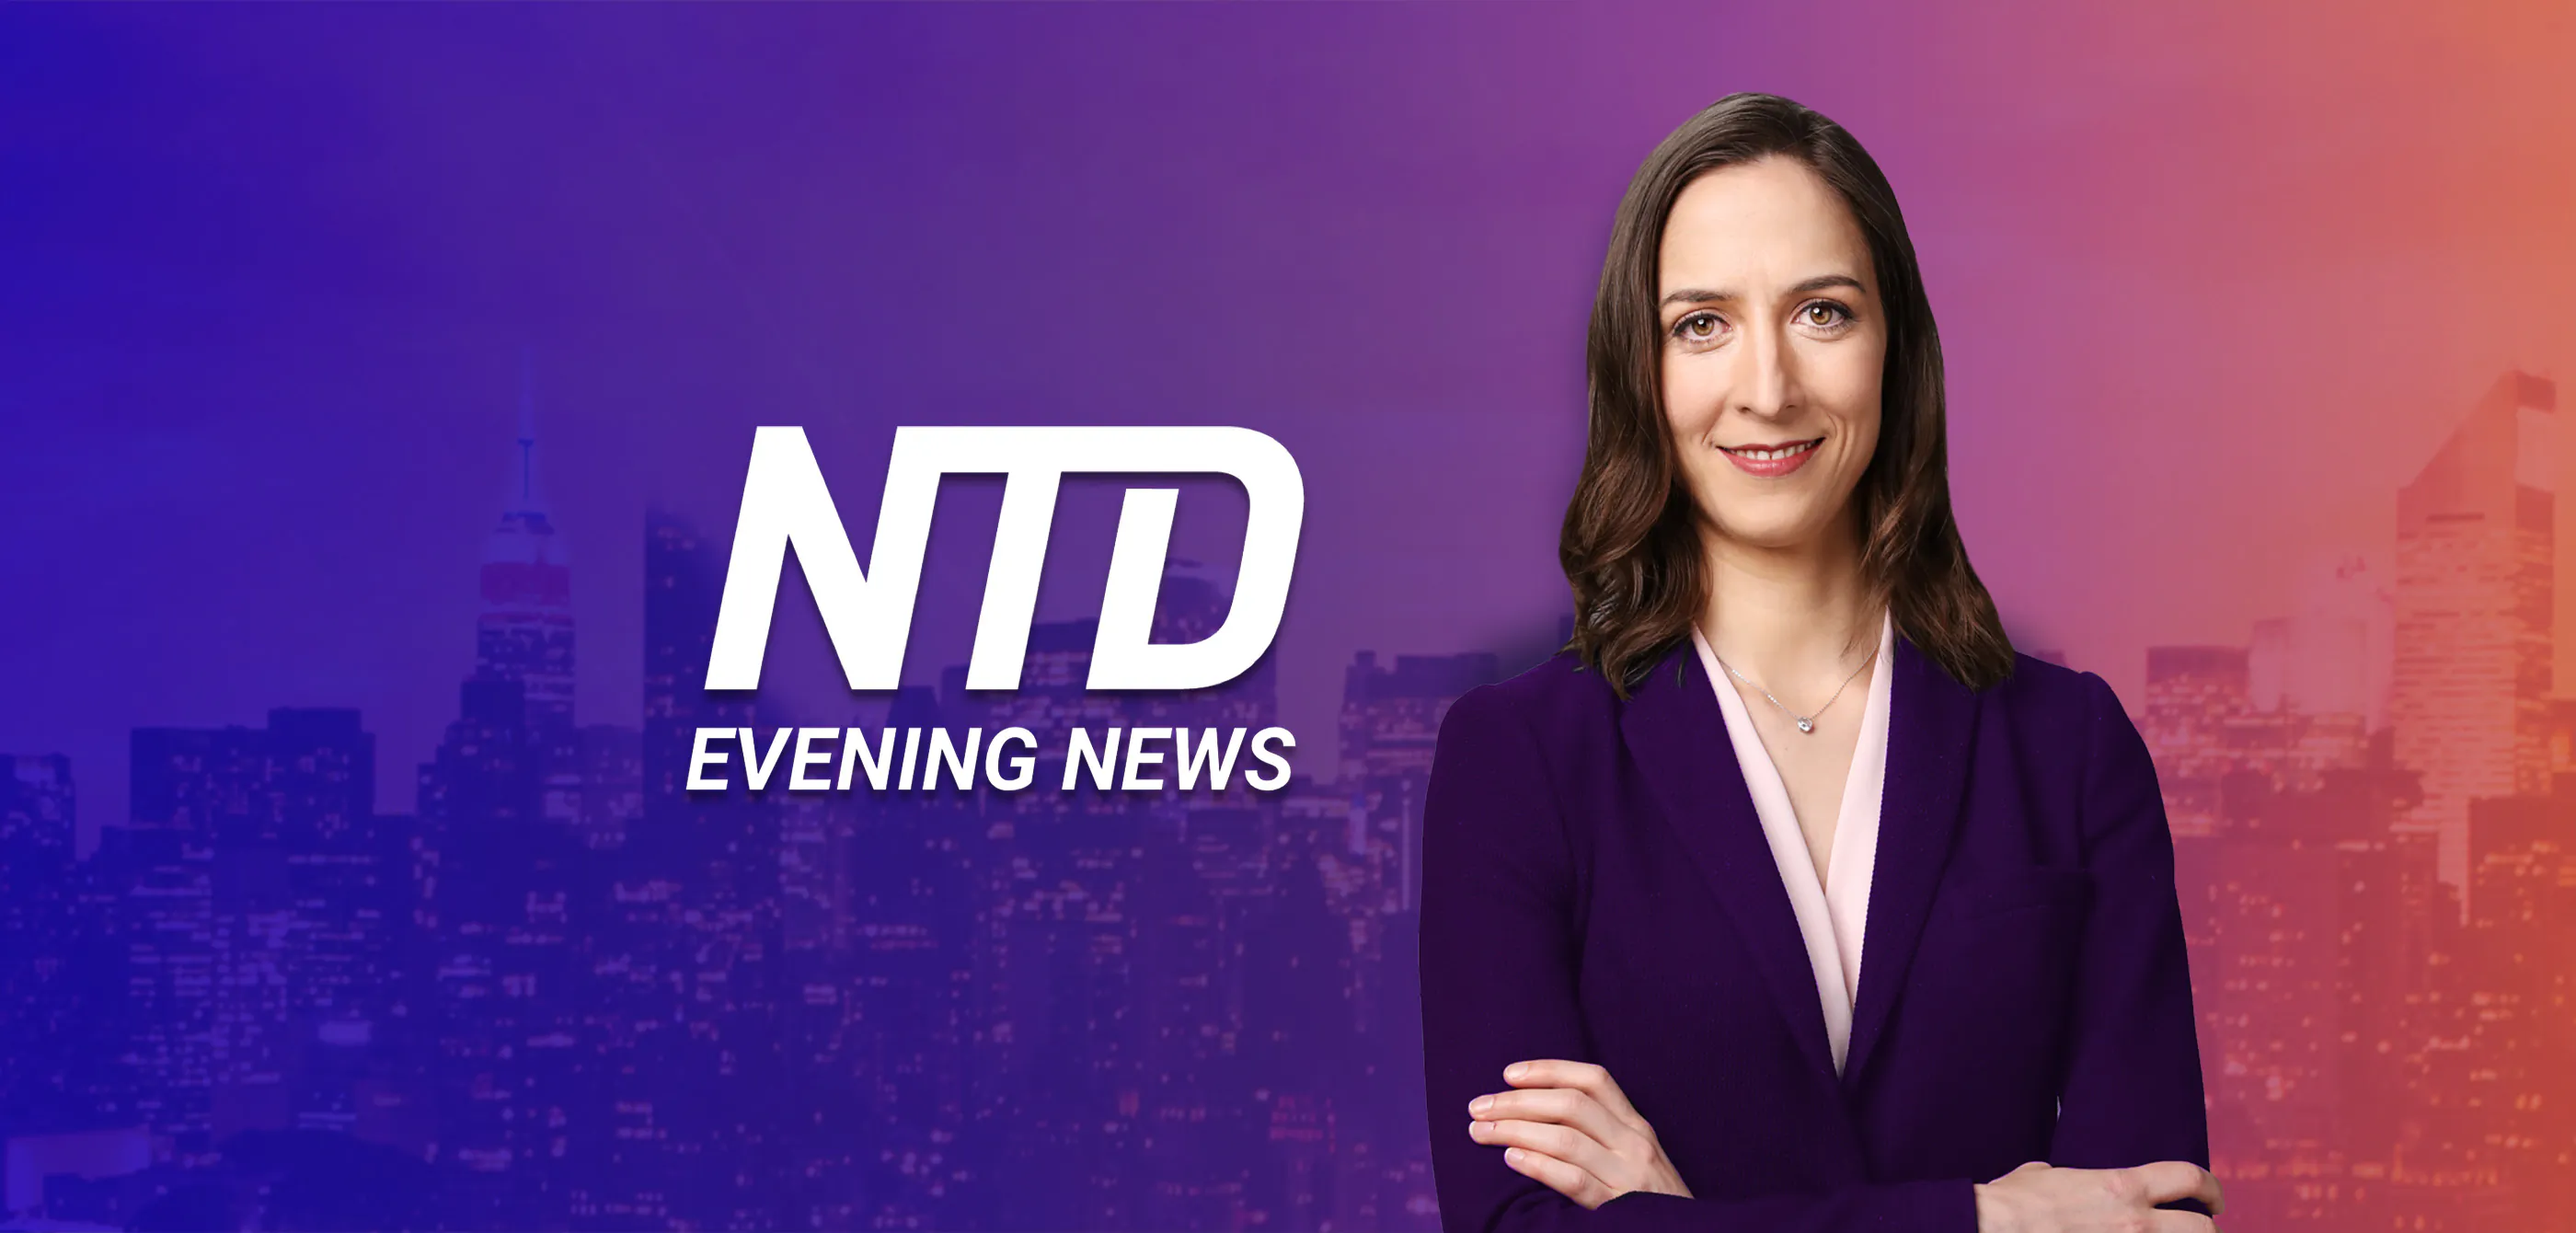 NTD Evening News